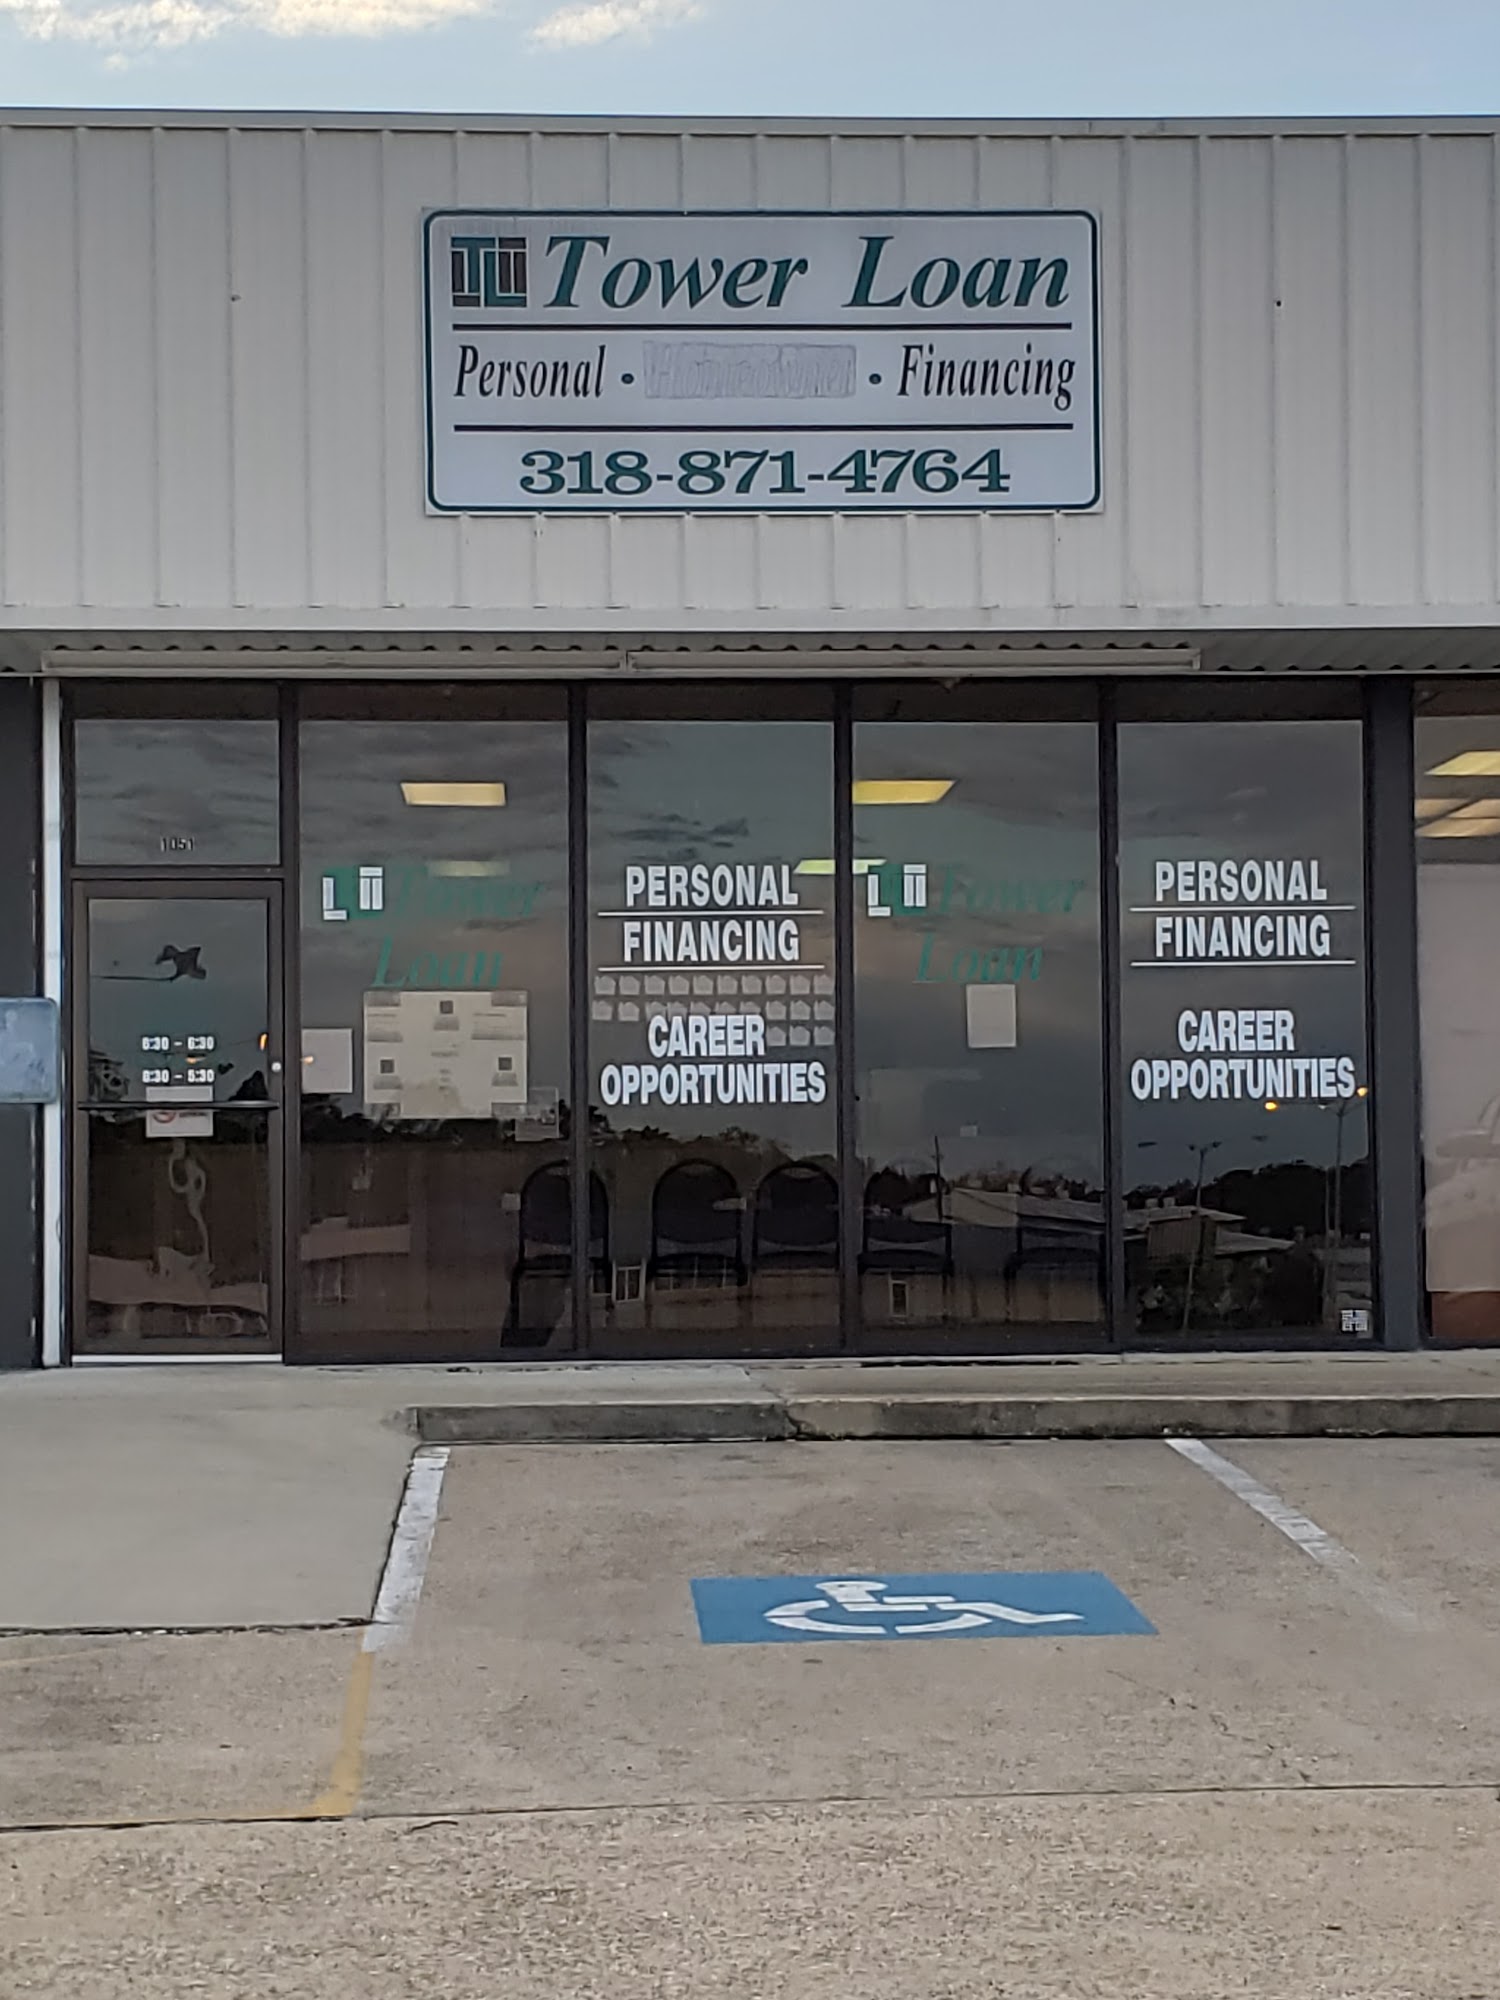 Tower Loan 1051 Washington Ave, Mansfield Louisiana 71052